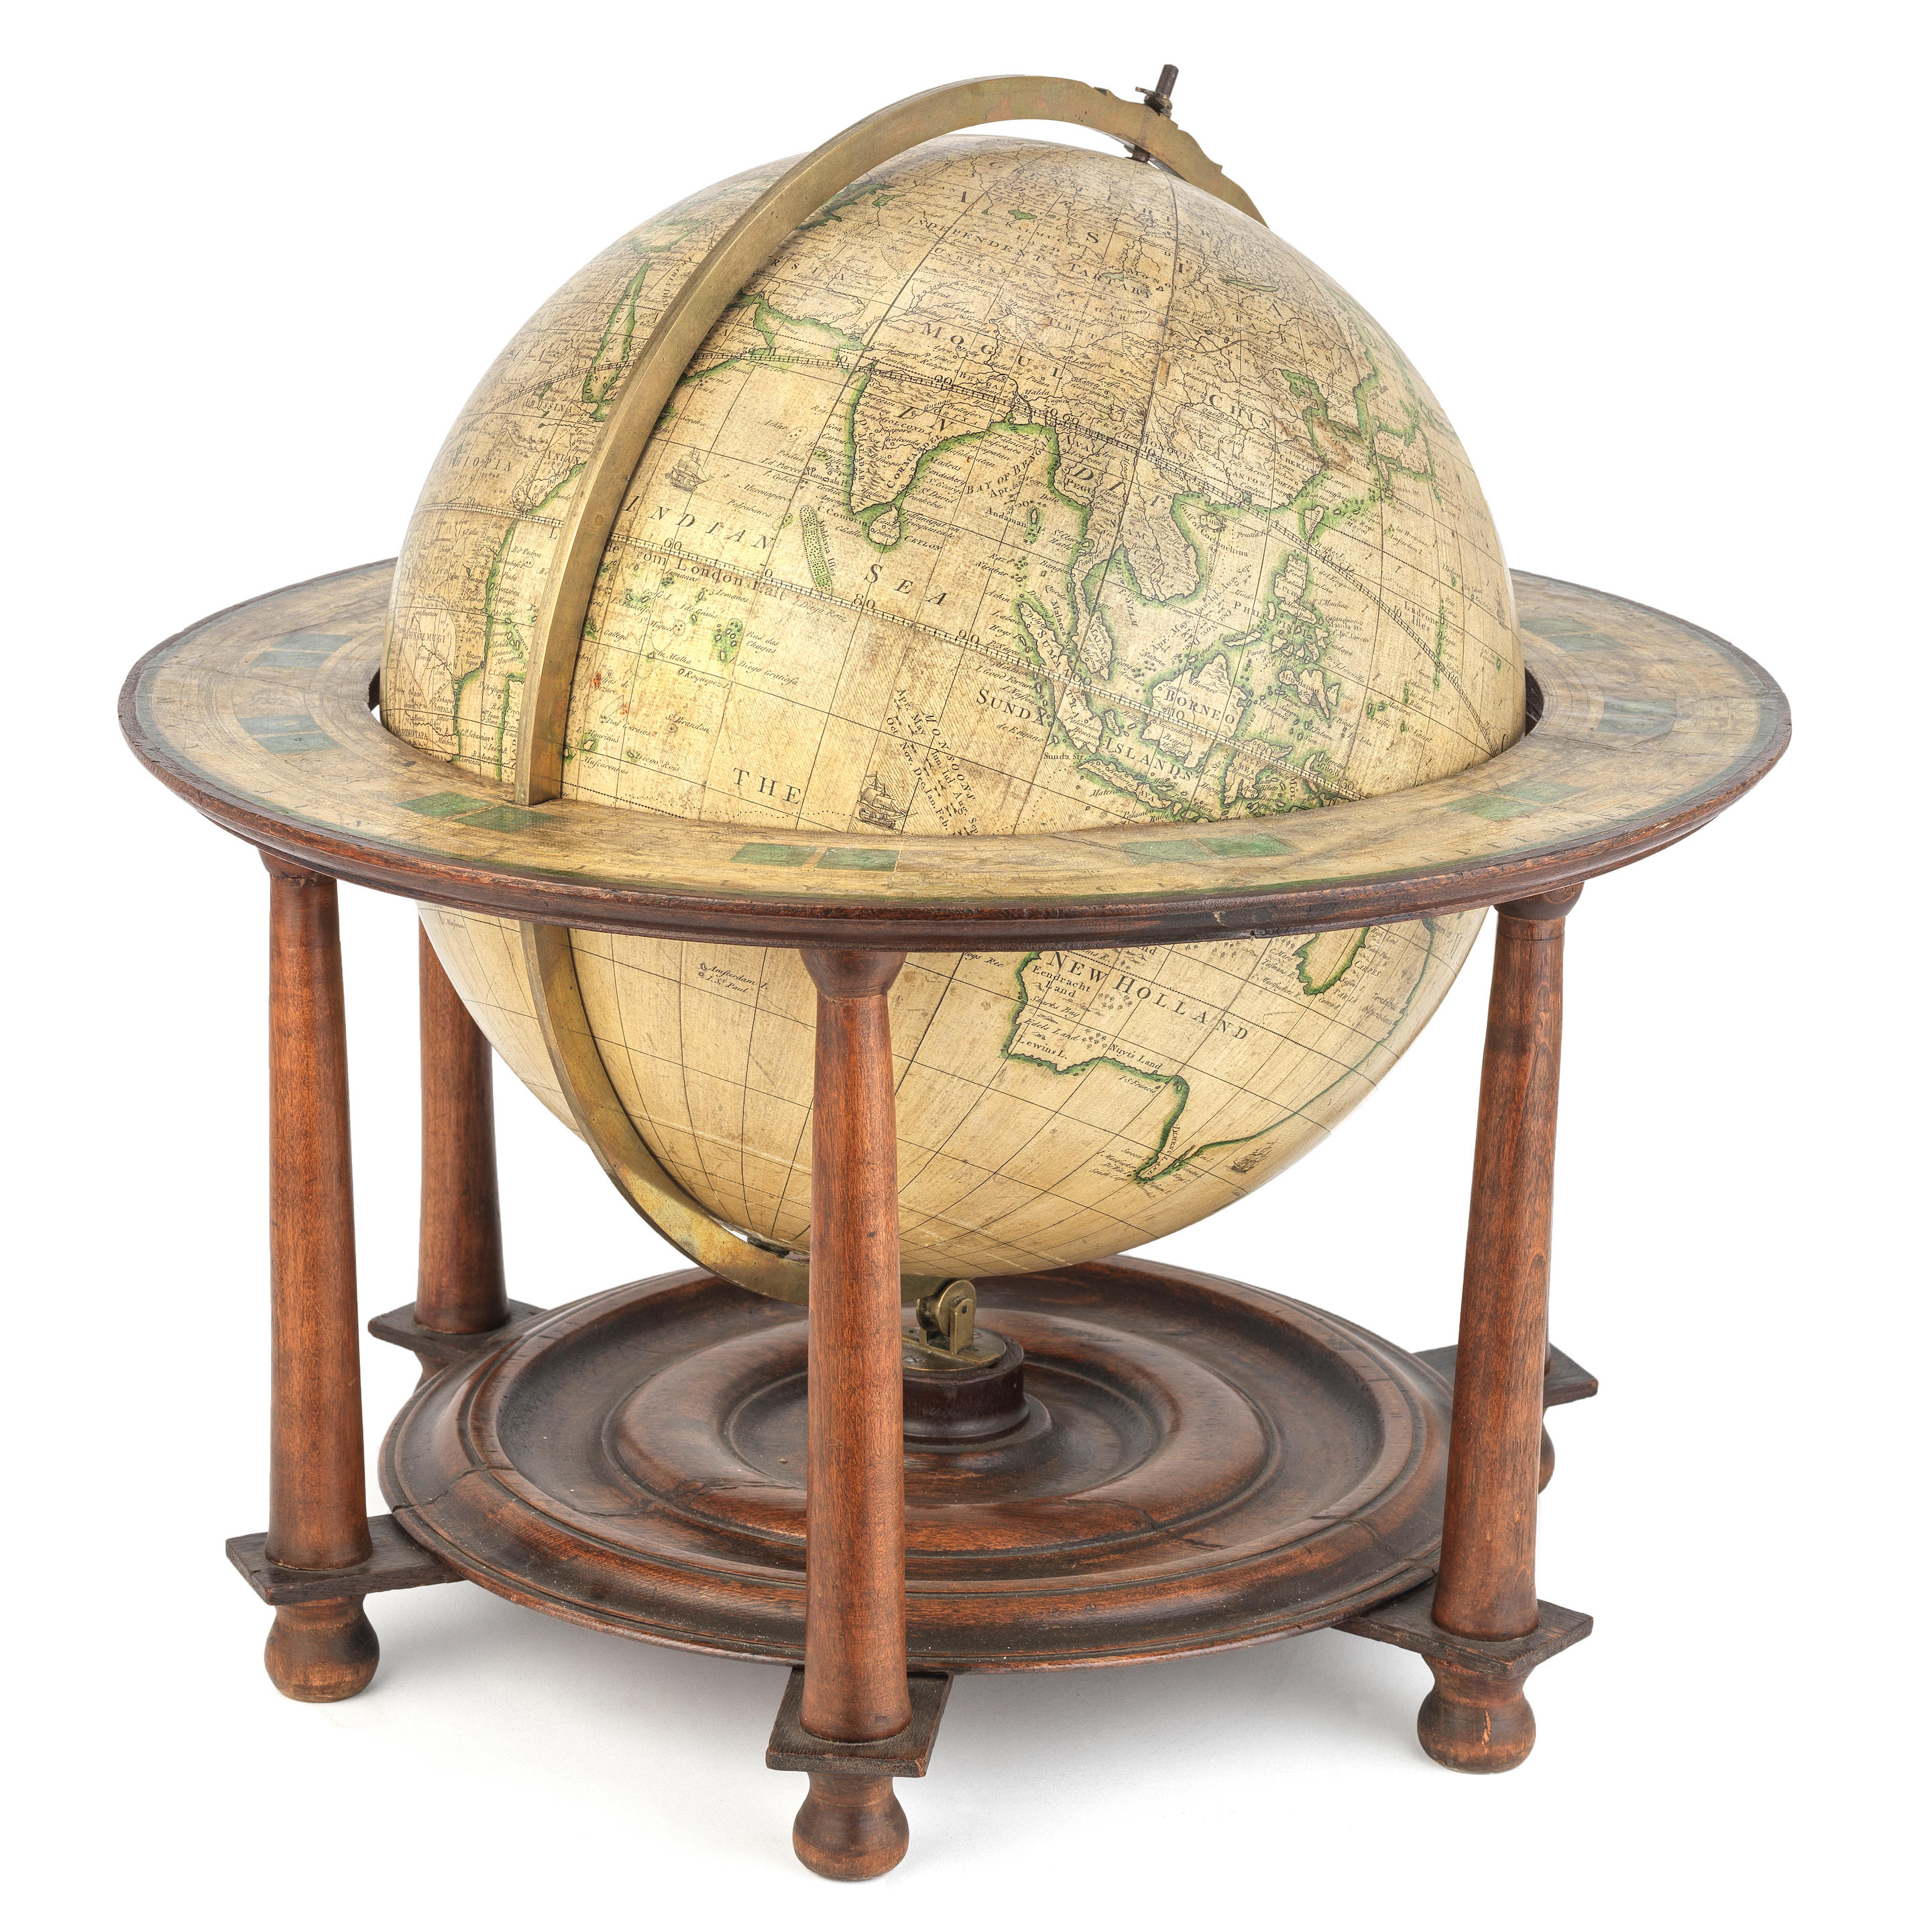 A 15-inch Leonard Cushee Terrestrial Table Globe, English, circa 1760,